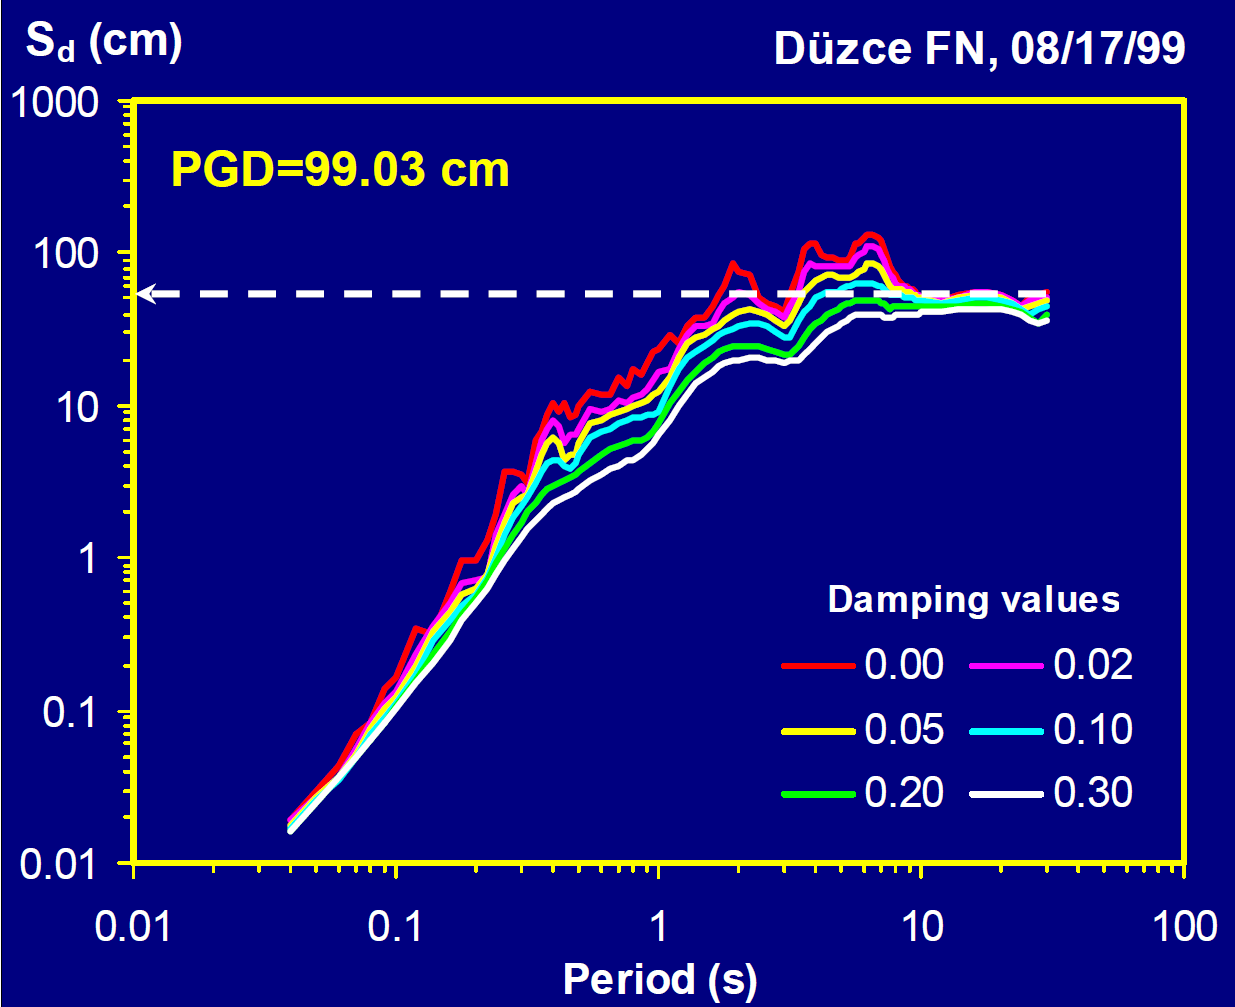 1999 Kocaeli Earthquake Düzce Record (Mw = 7.